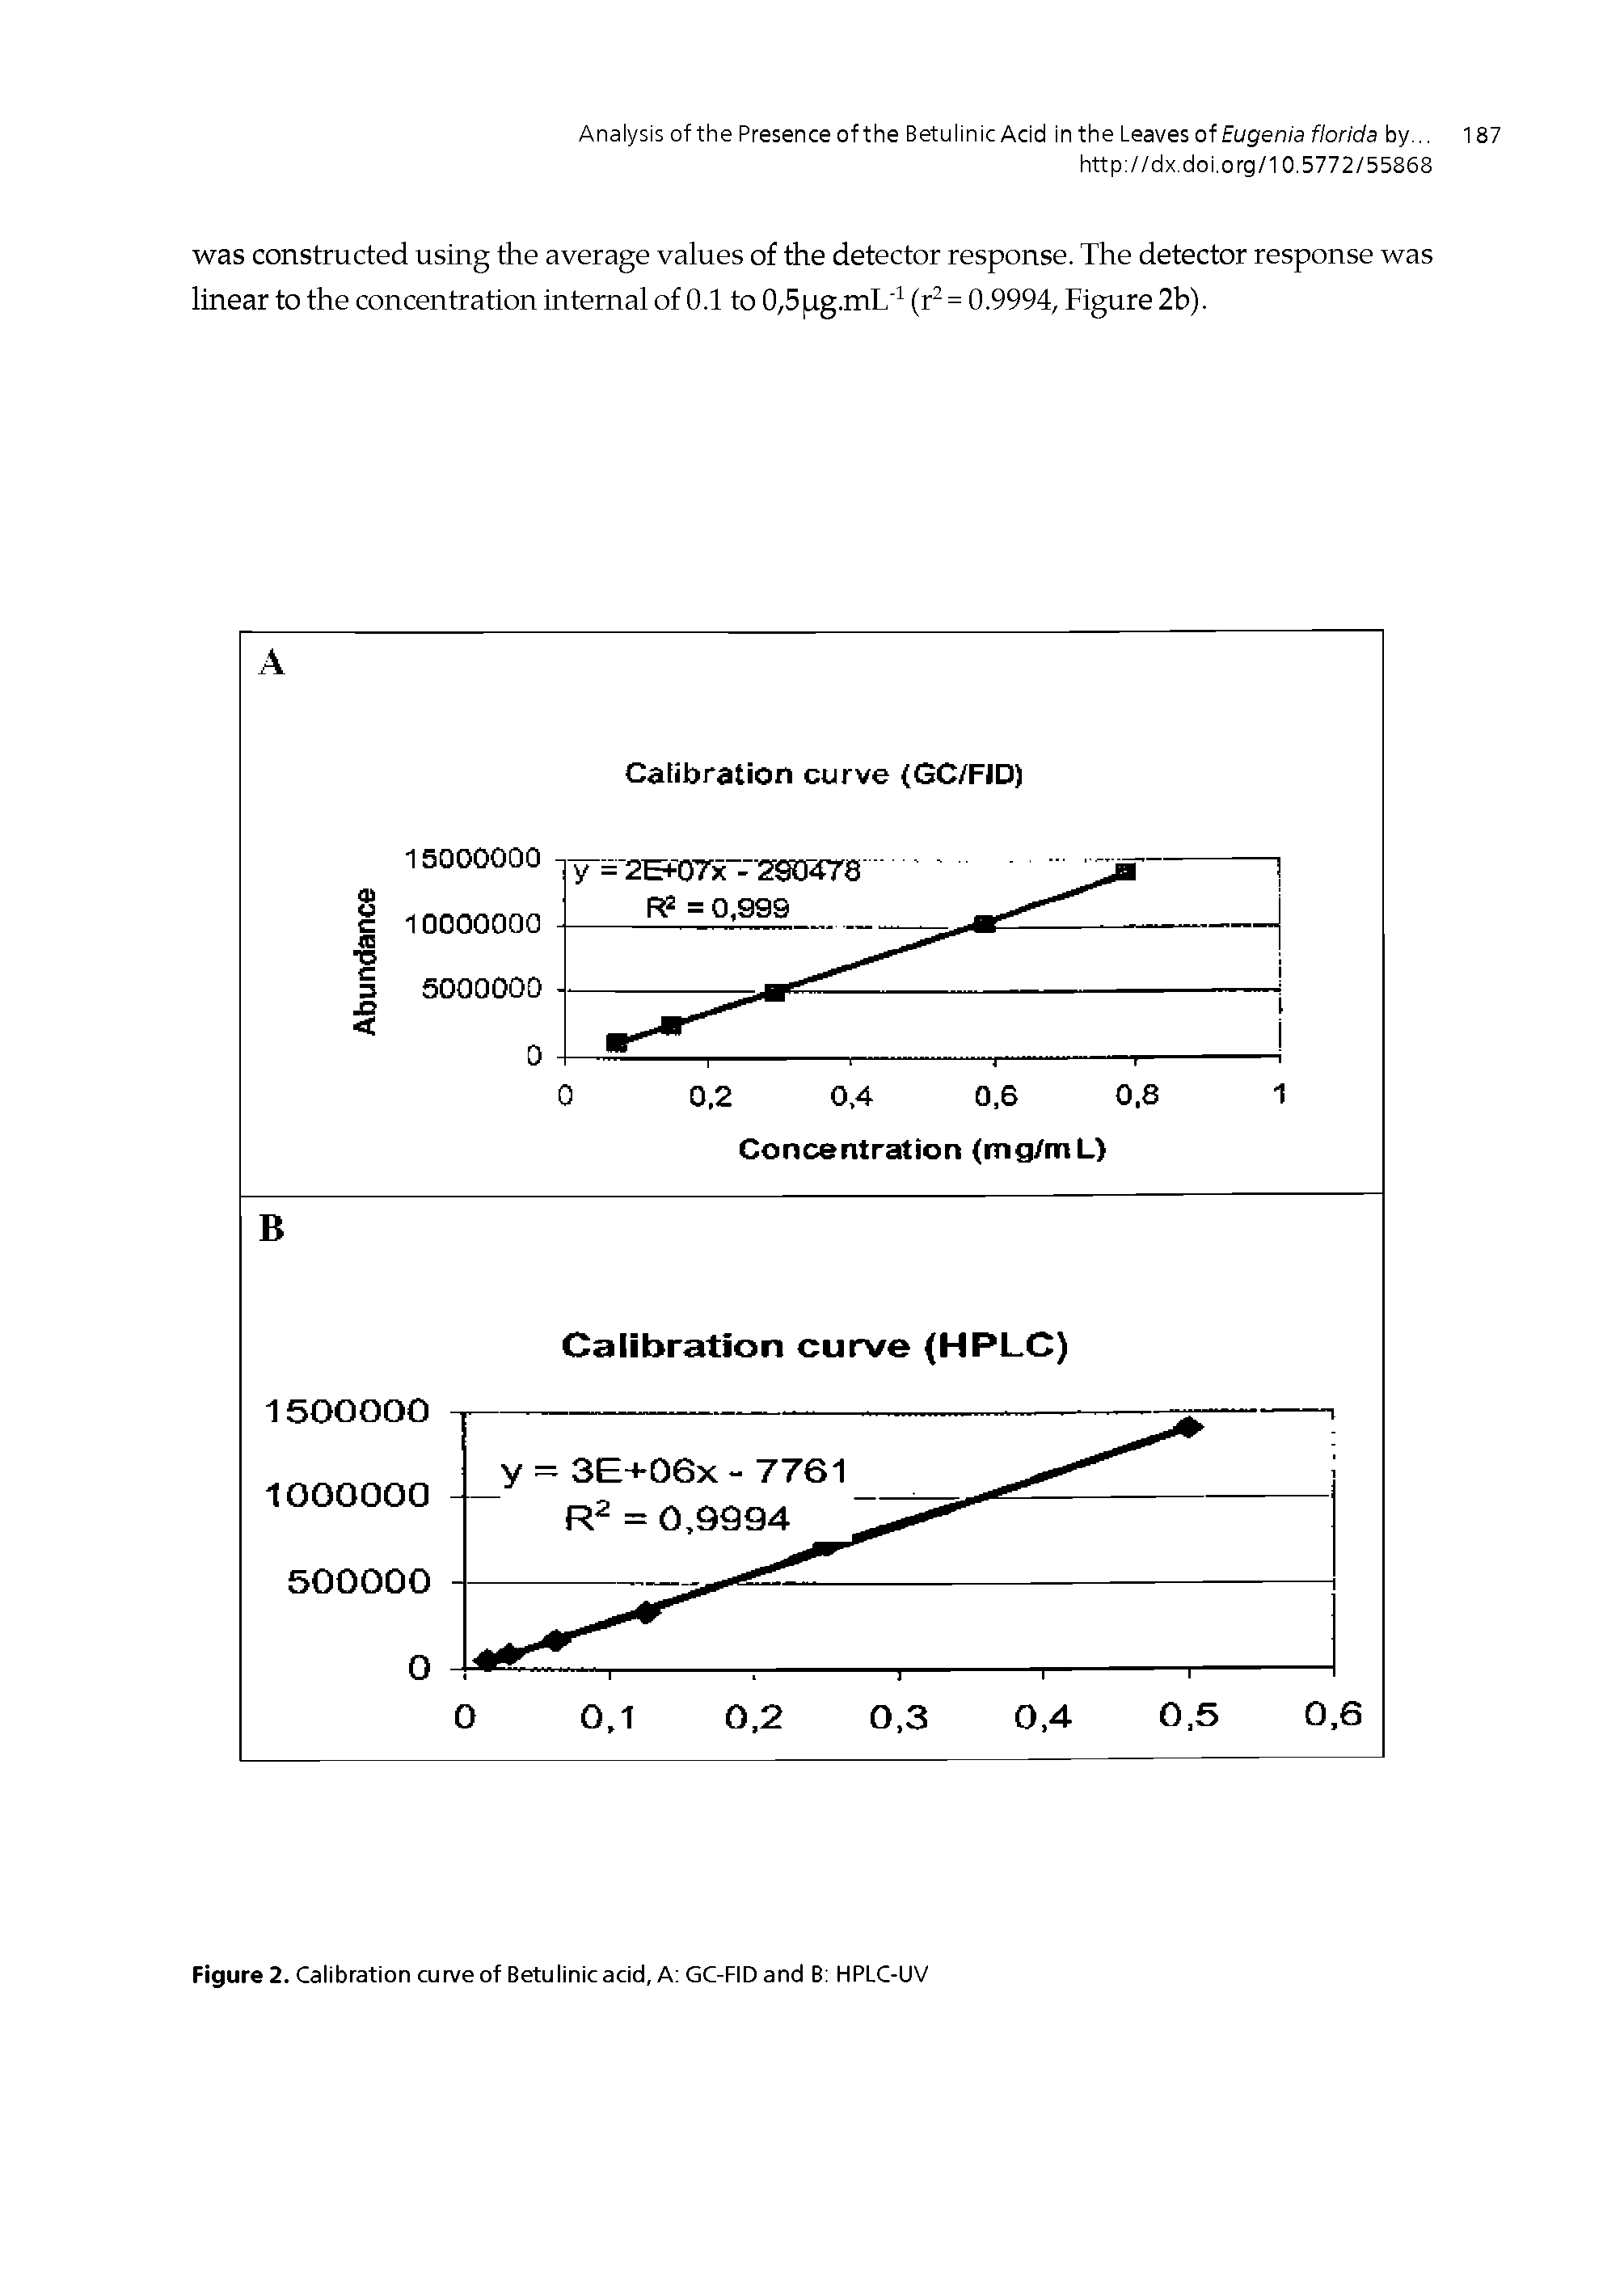 Figure 2. Calibration cunreof Betulinic acid. A GC-FID and B HPLC-UV...